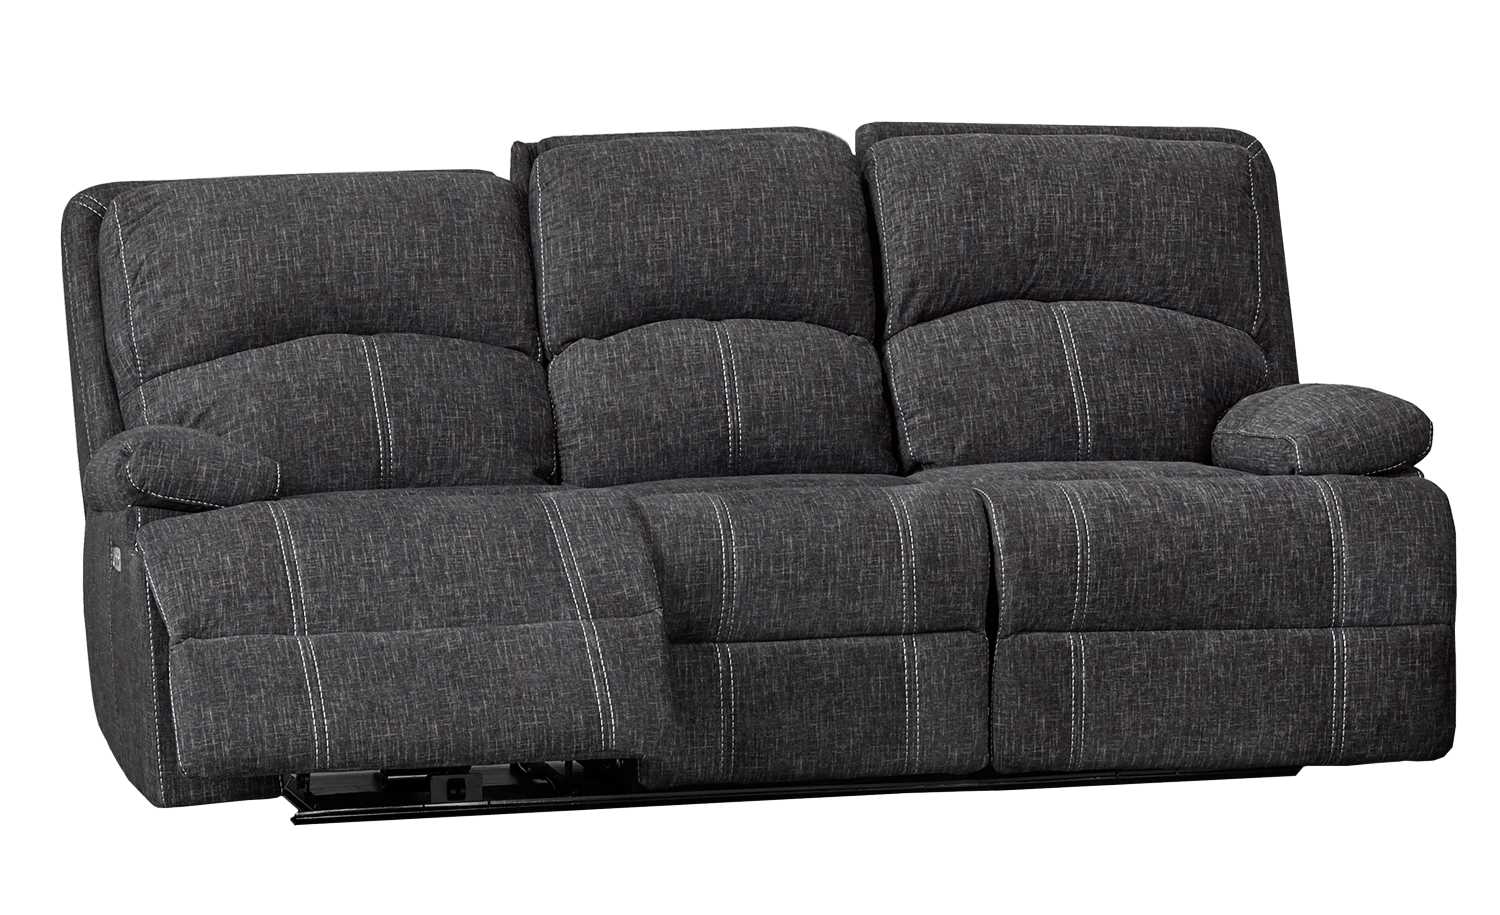 Recliner Sofa Collection Grey SA2200